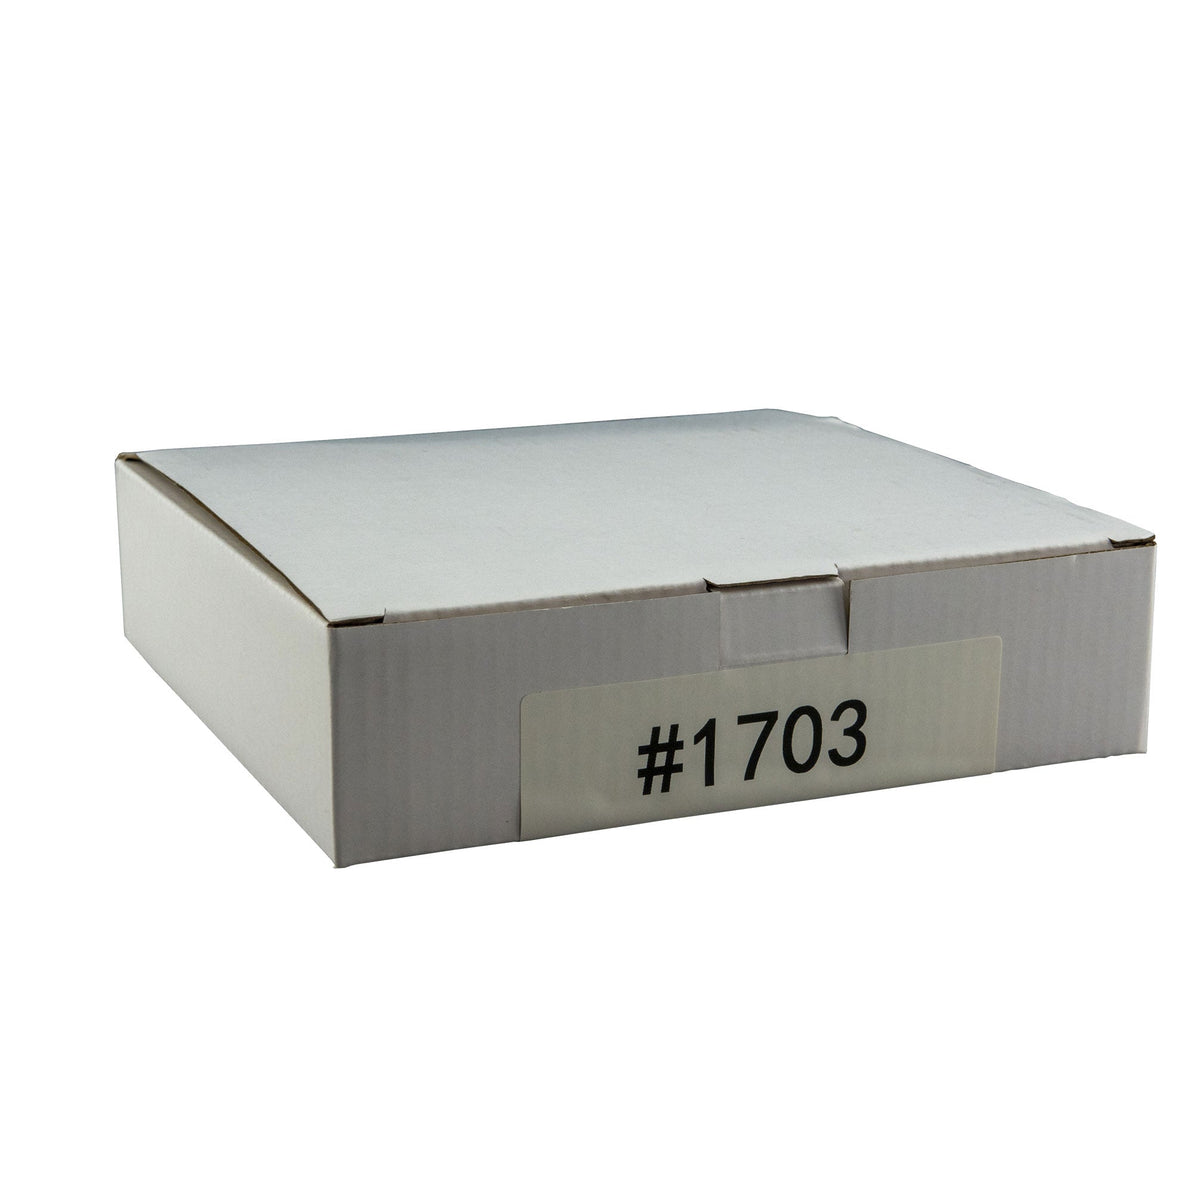 175mm x 175mm x 45mm White Carton Box (#1703)